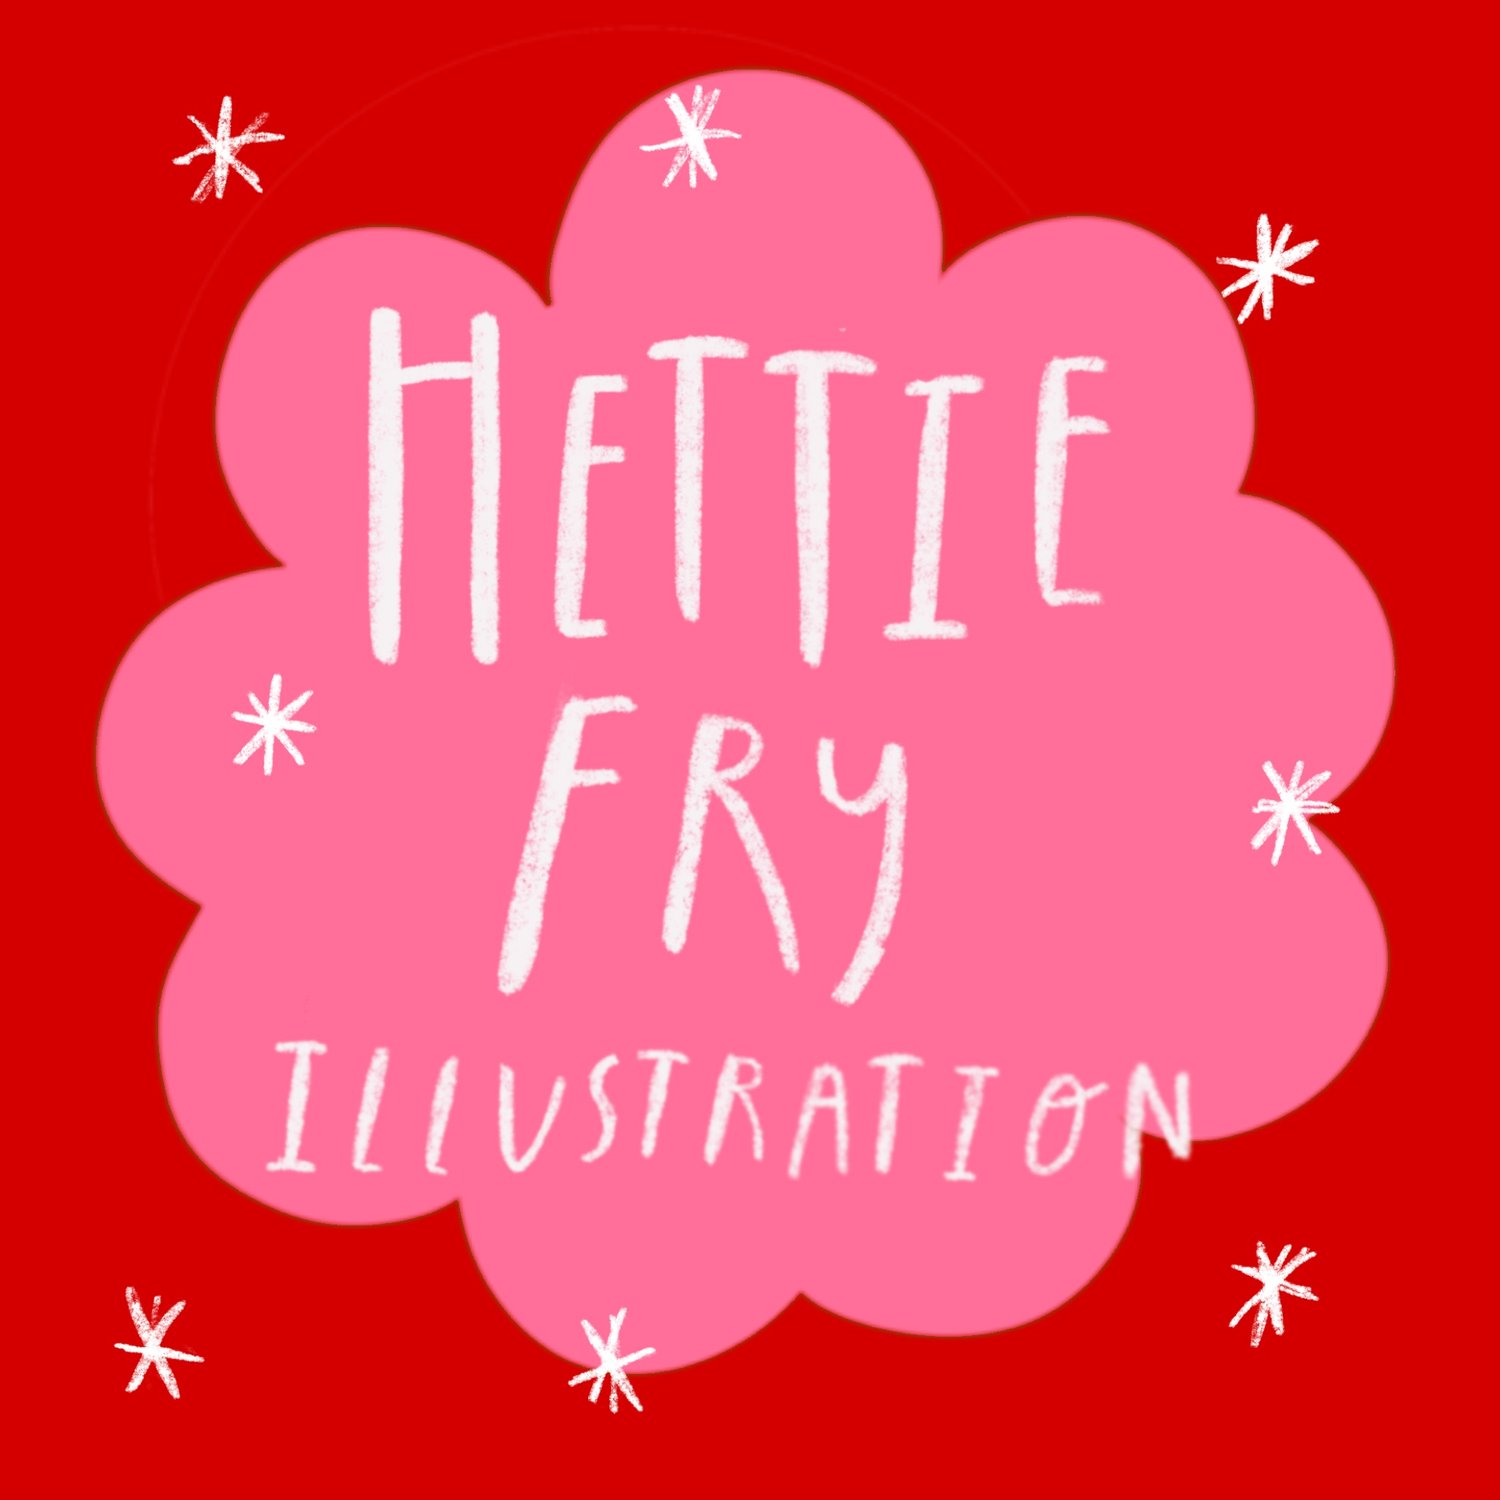 Hettie Fry Illustrations